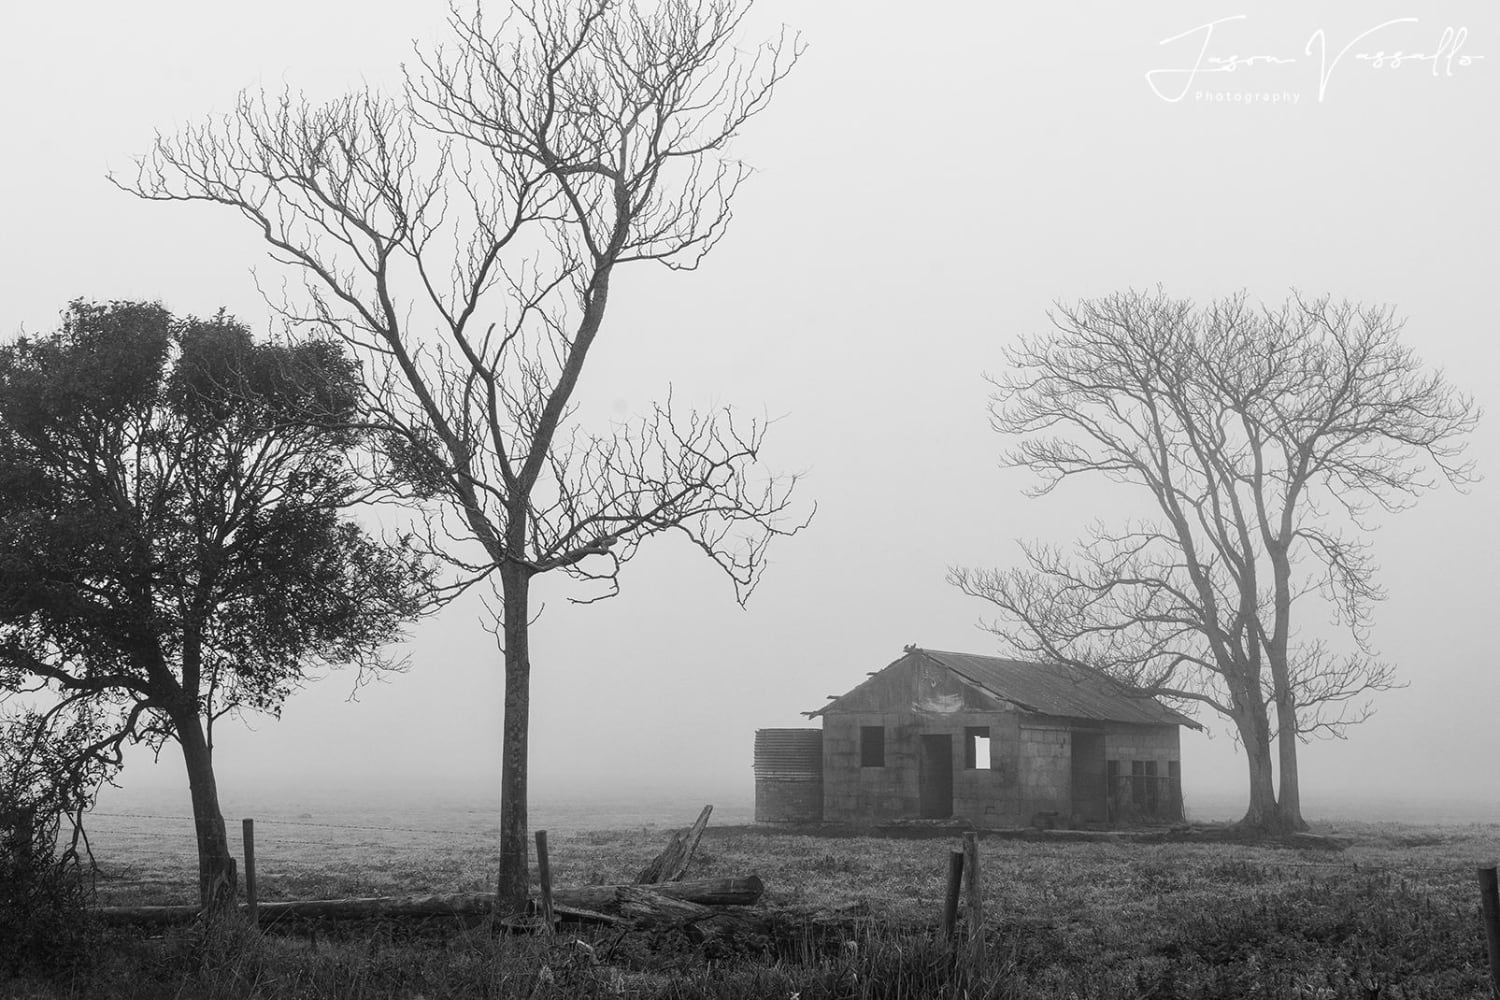 A frosty morning in rural Australia.